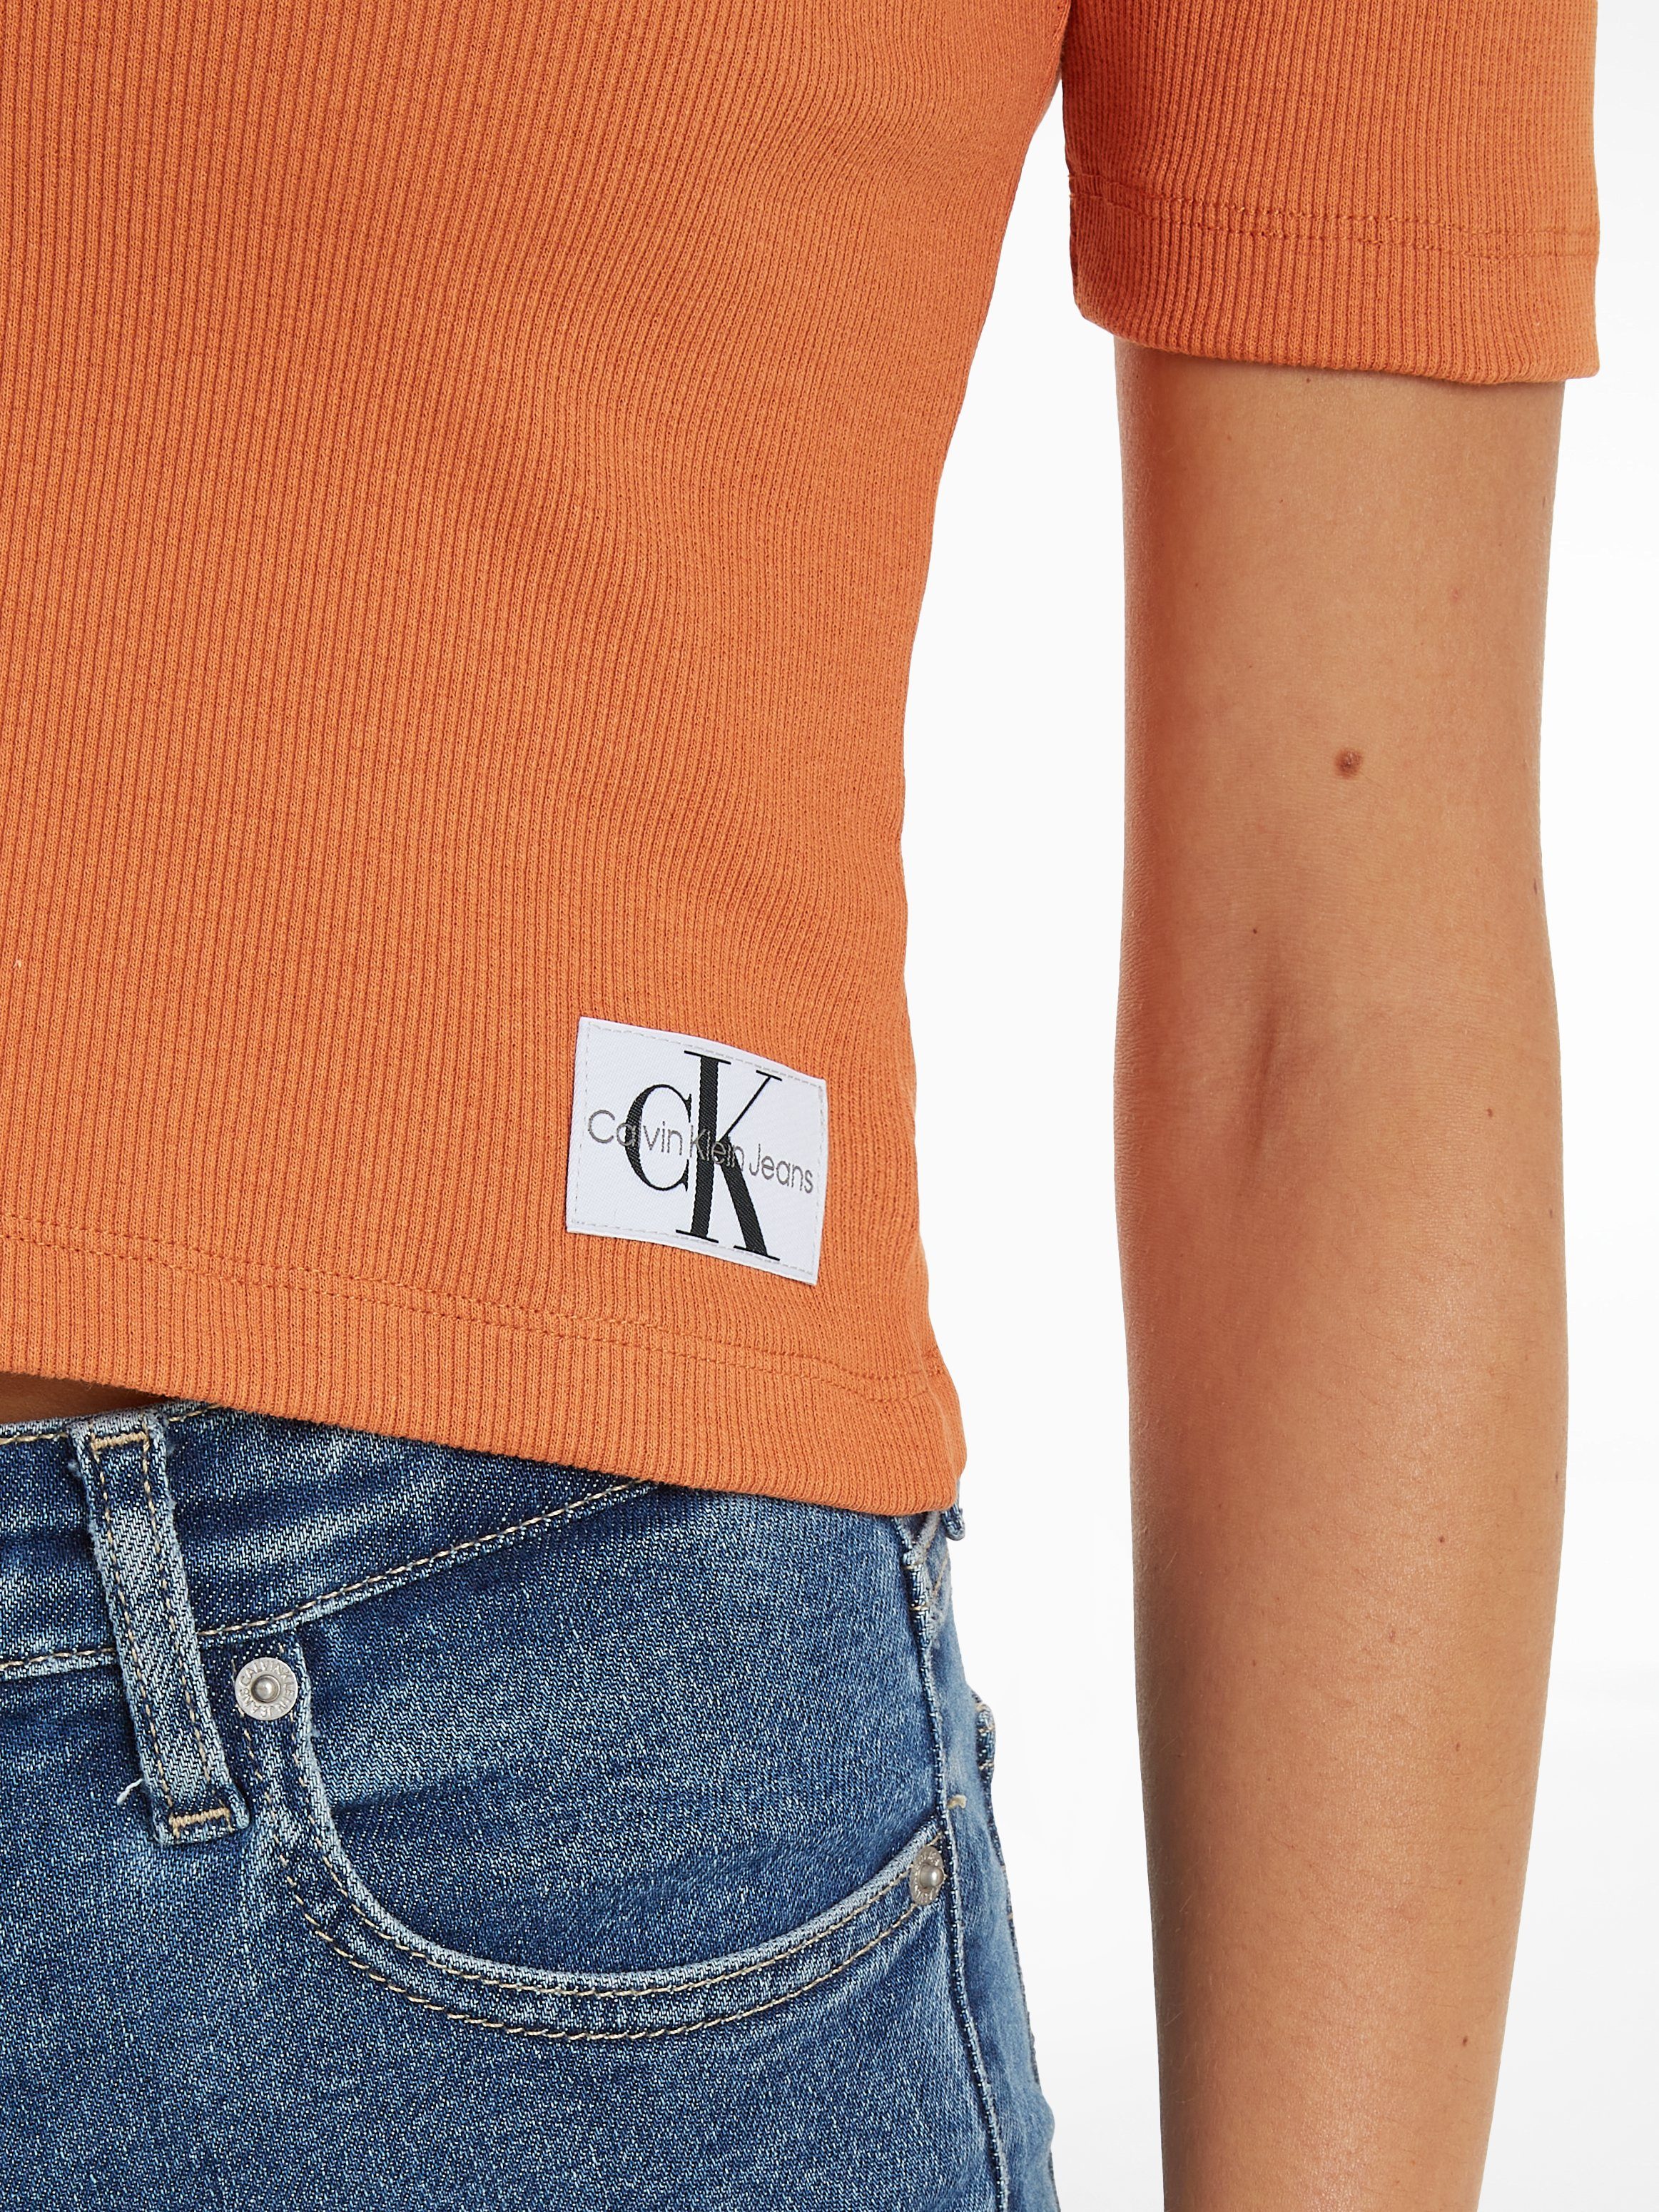 Calvin V-Shirt Jeans orange Klein